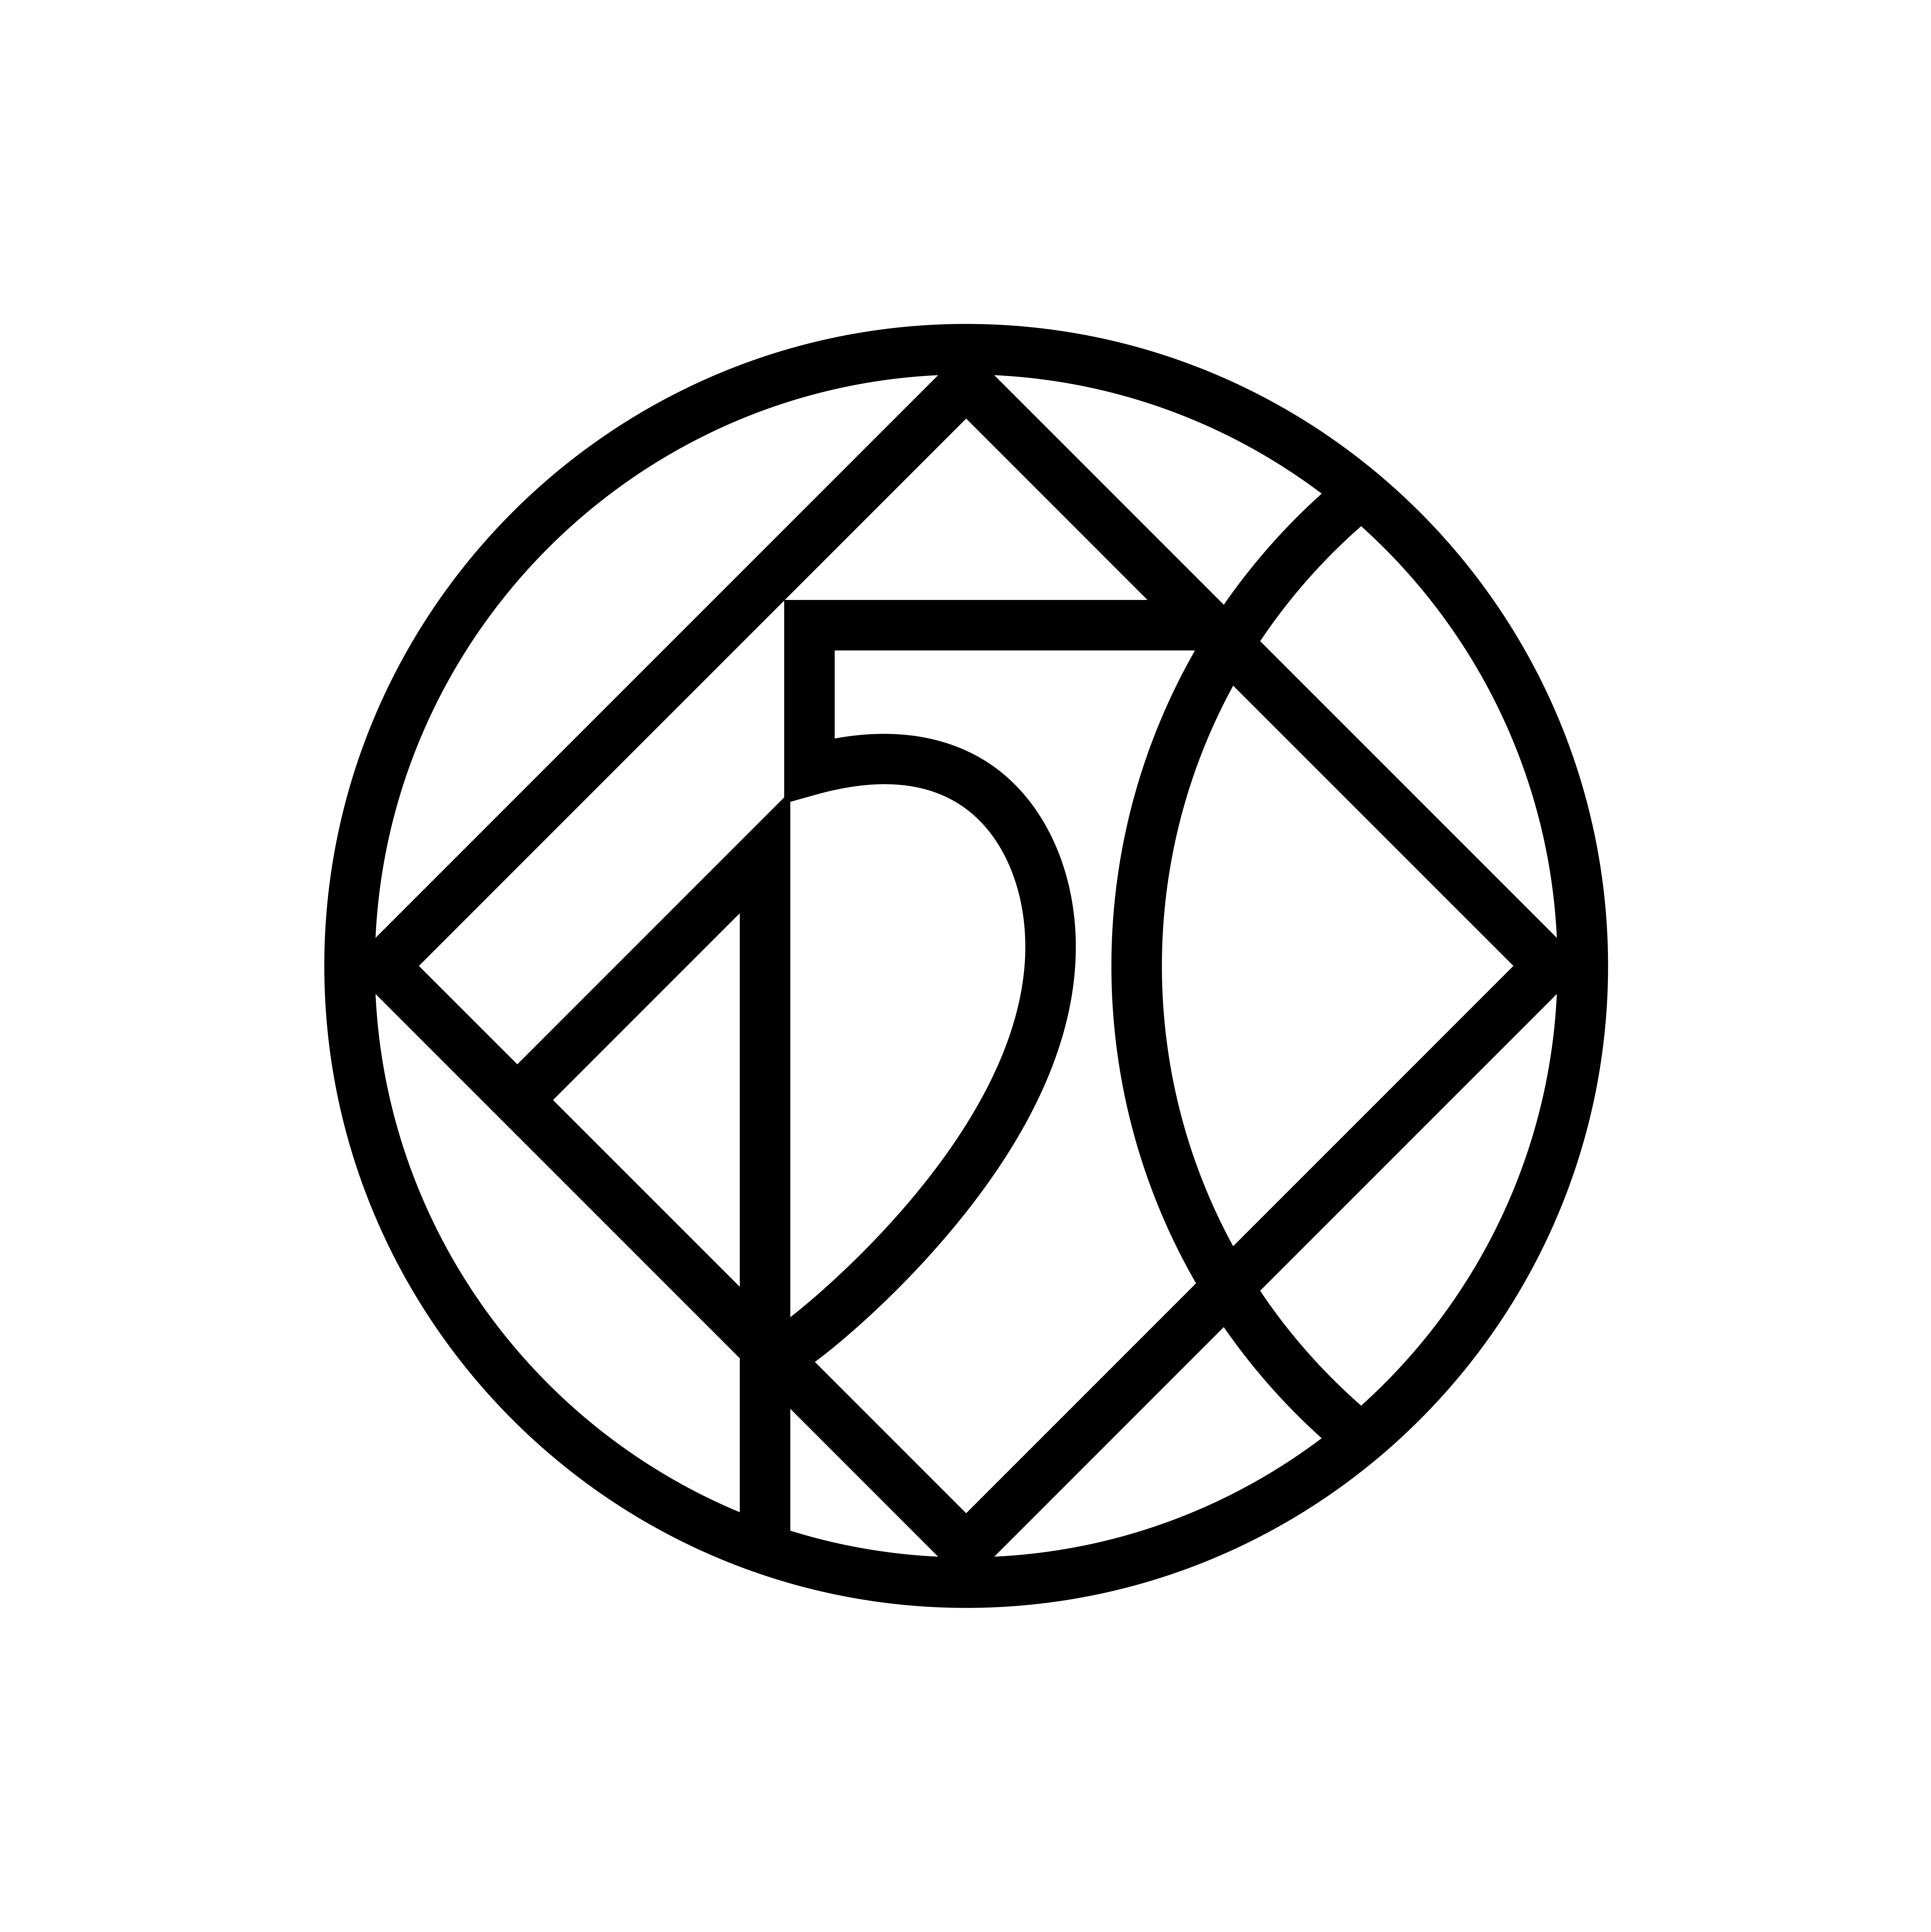 Dzdsv simbol black